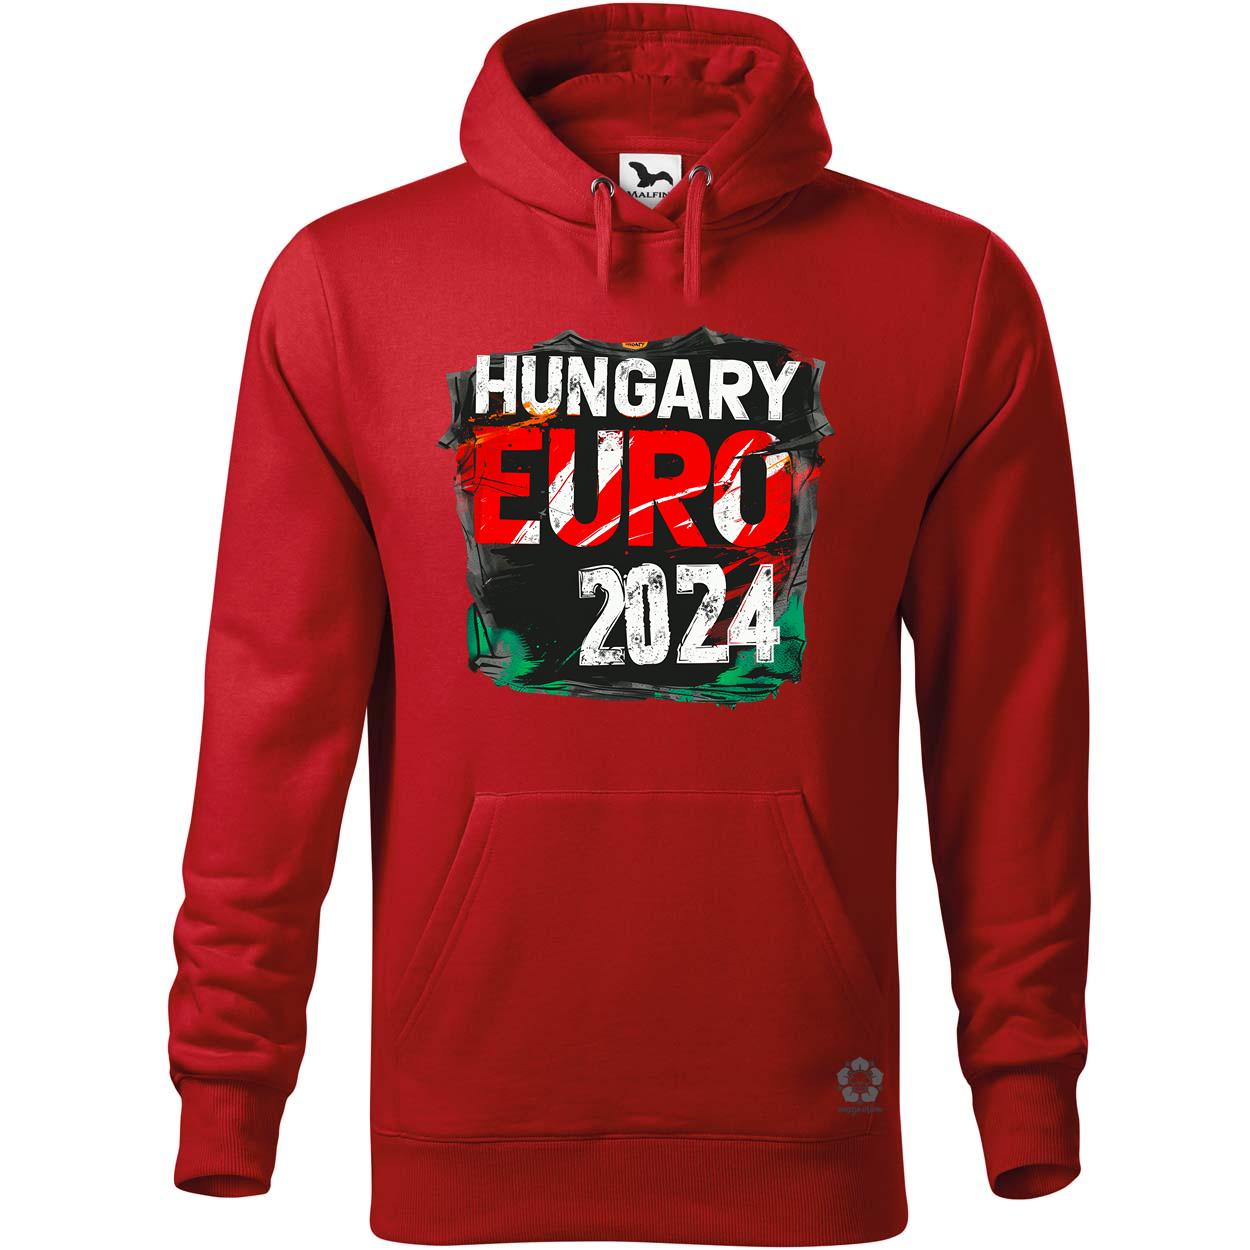 Hungary Euro 2024 v4